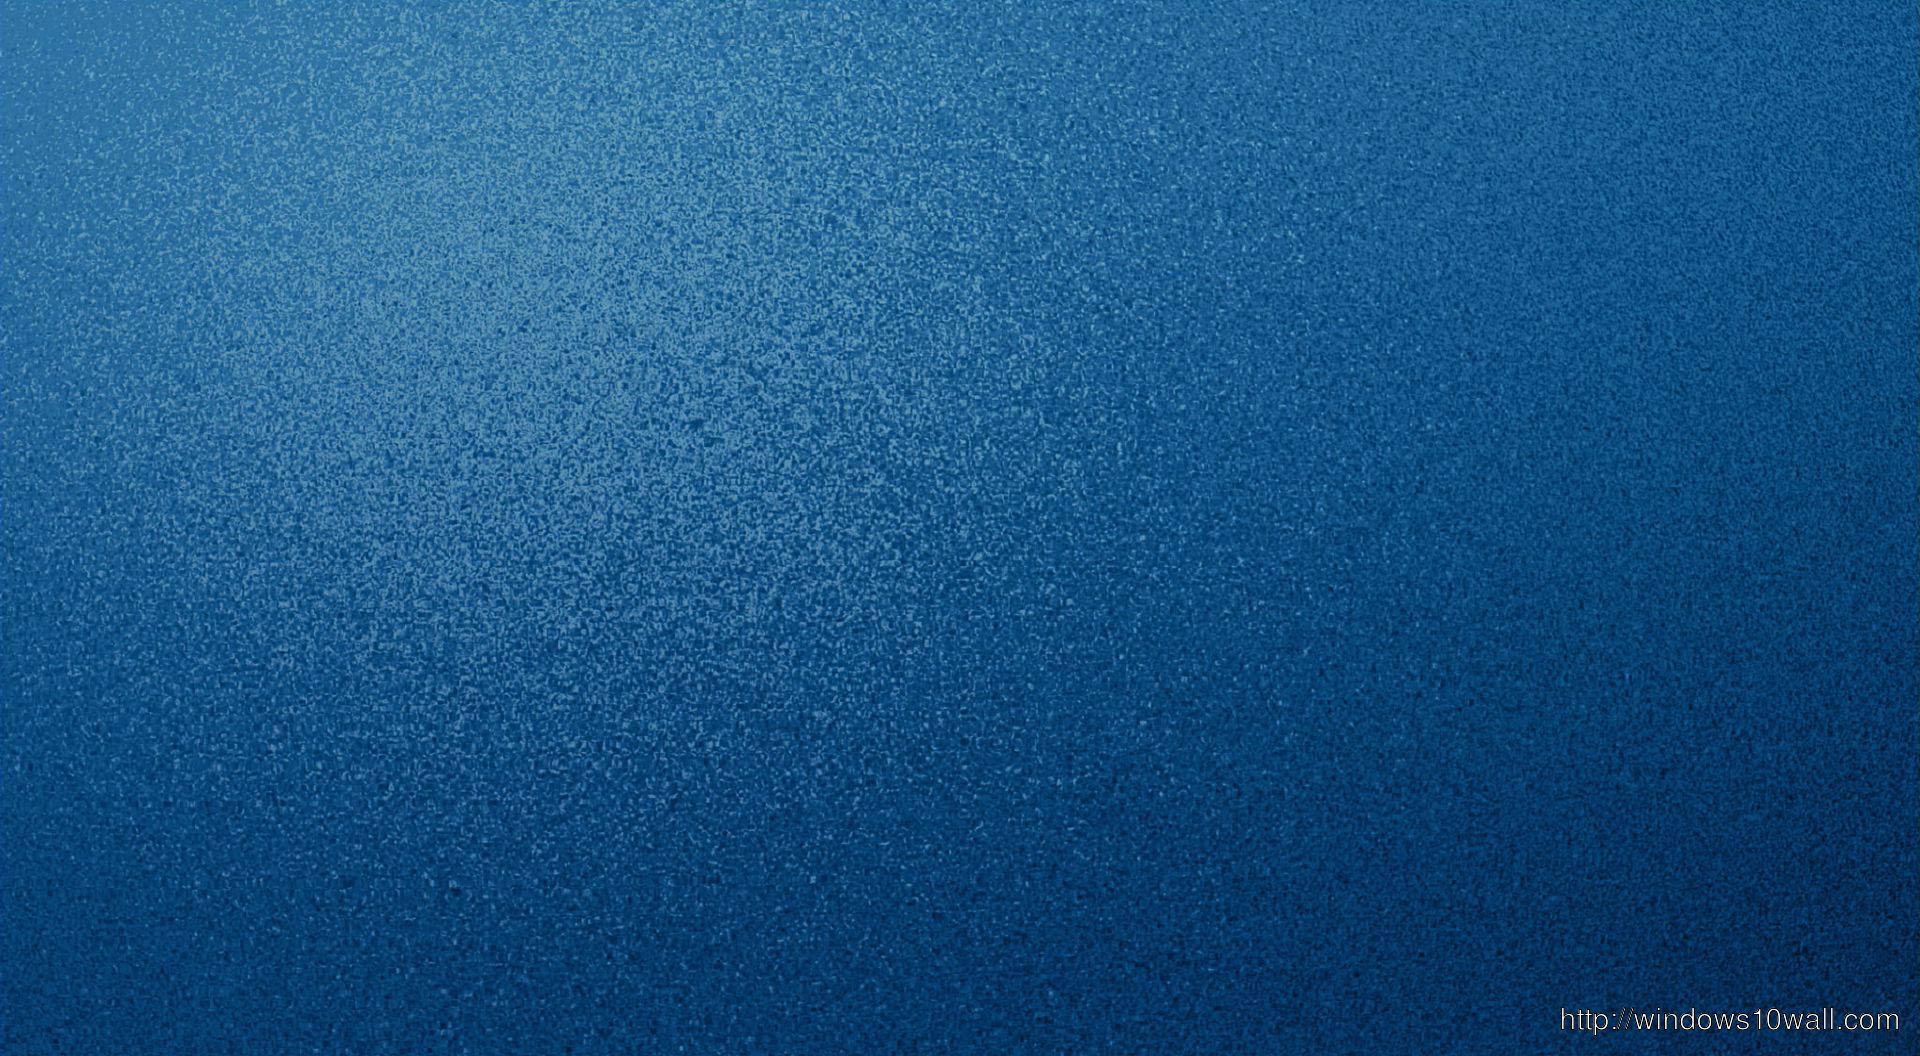 Blue Textured Speckled Background Wallpaper